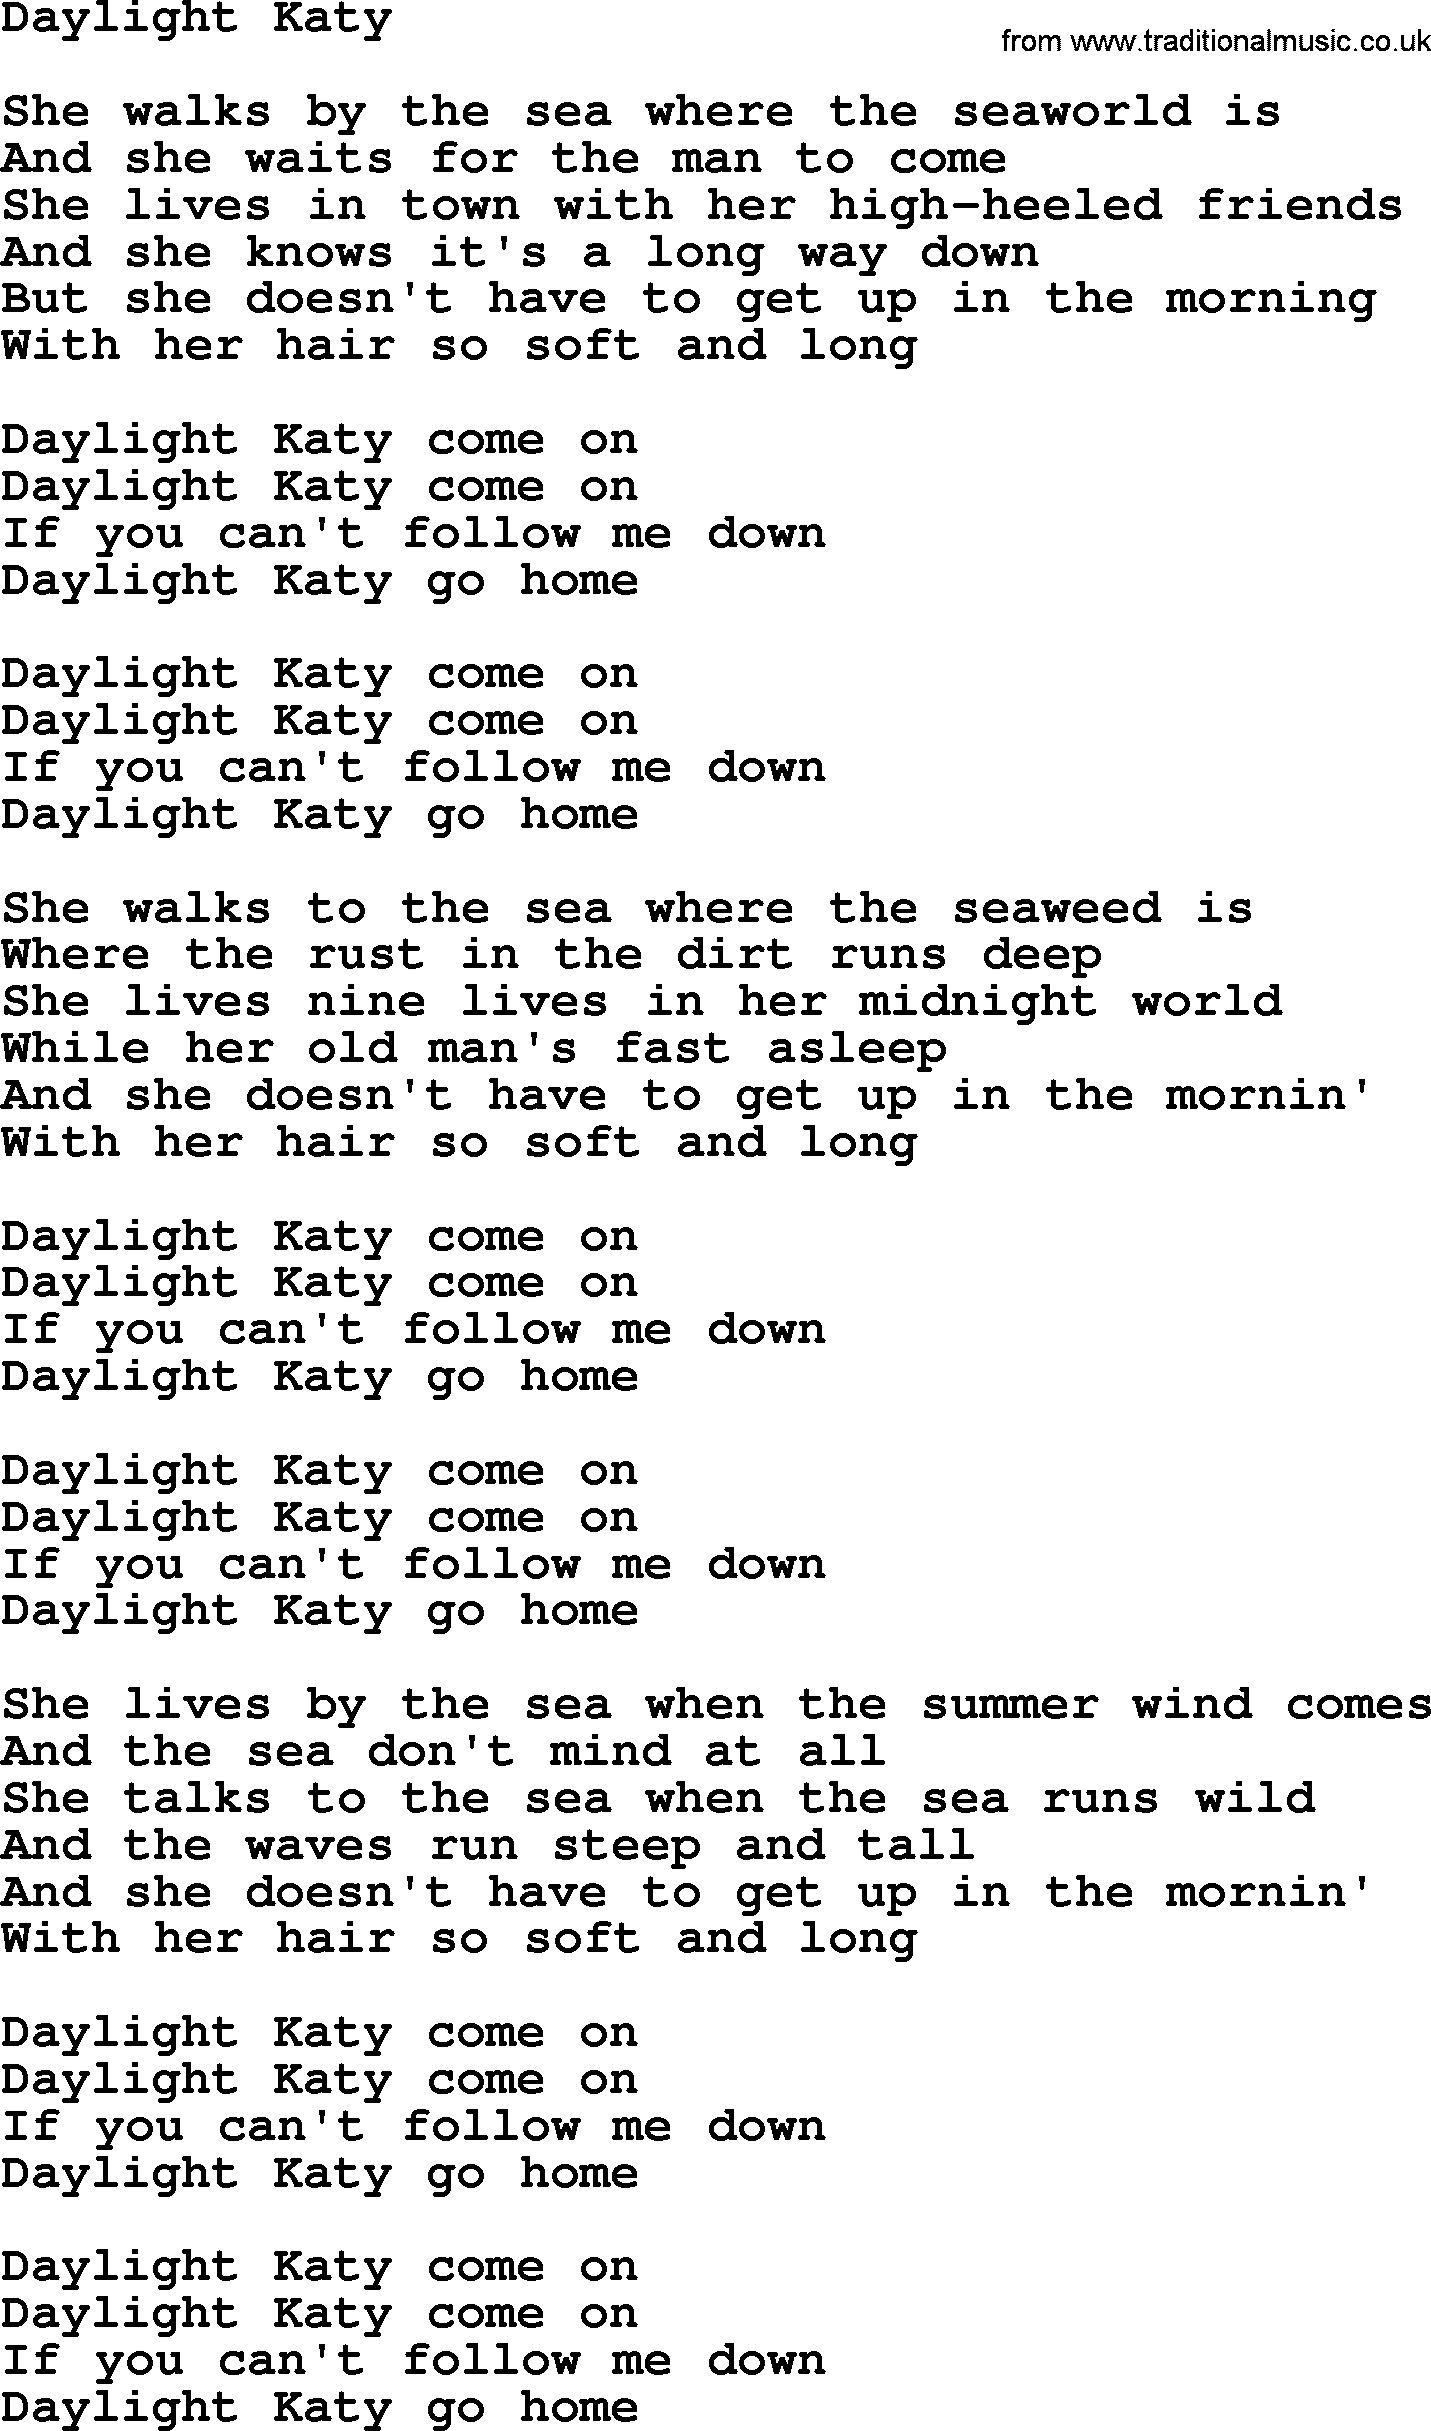 Gordon Lightfoot song Daylight Katy, lyrics